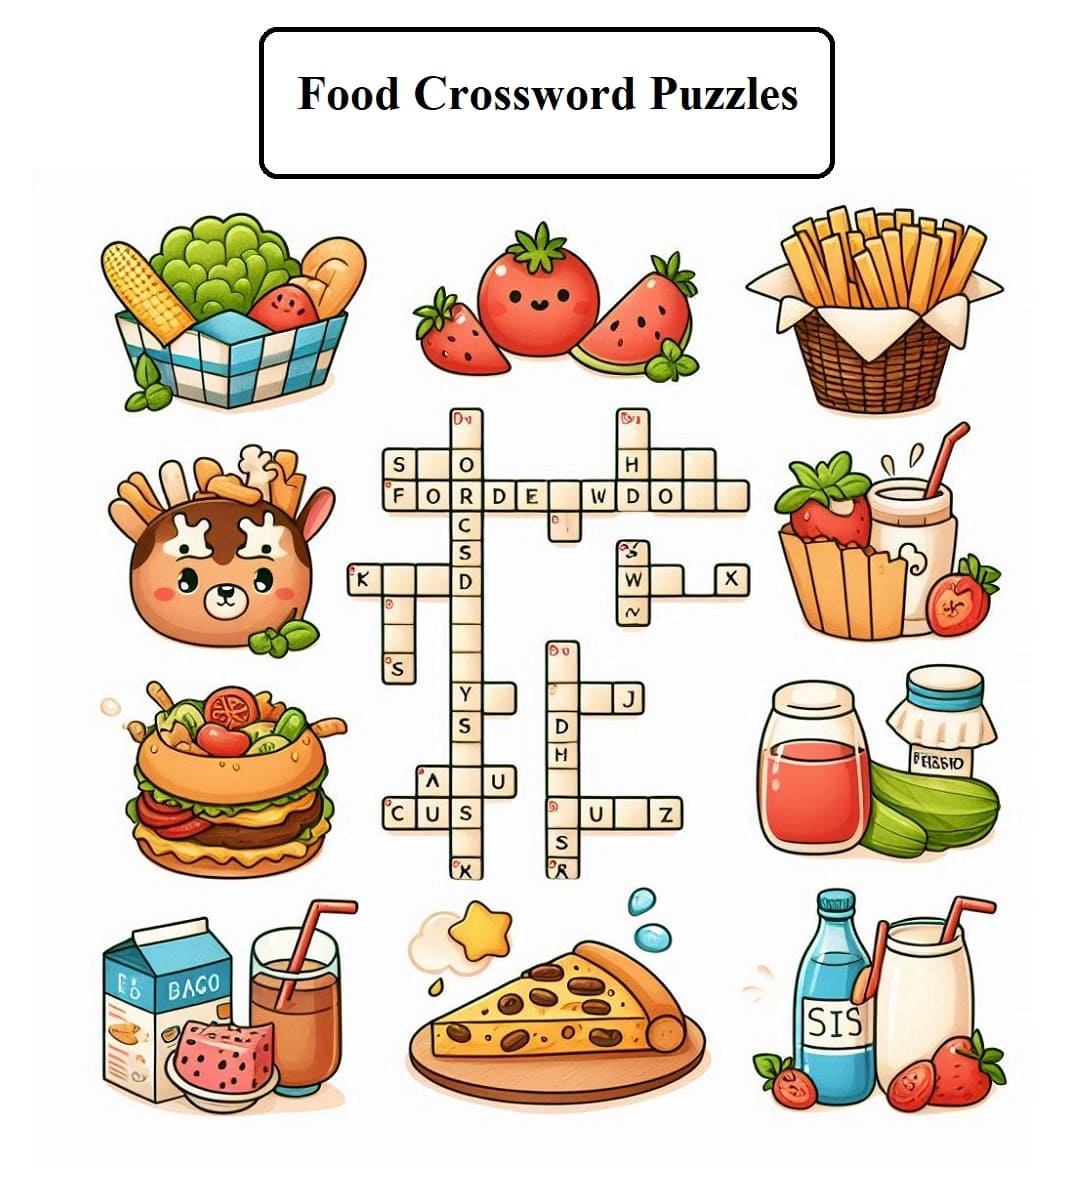 Food Crossword Puzzles